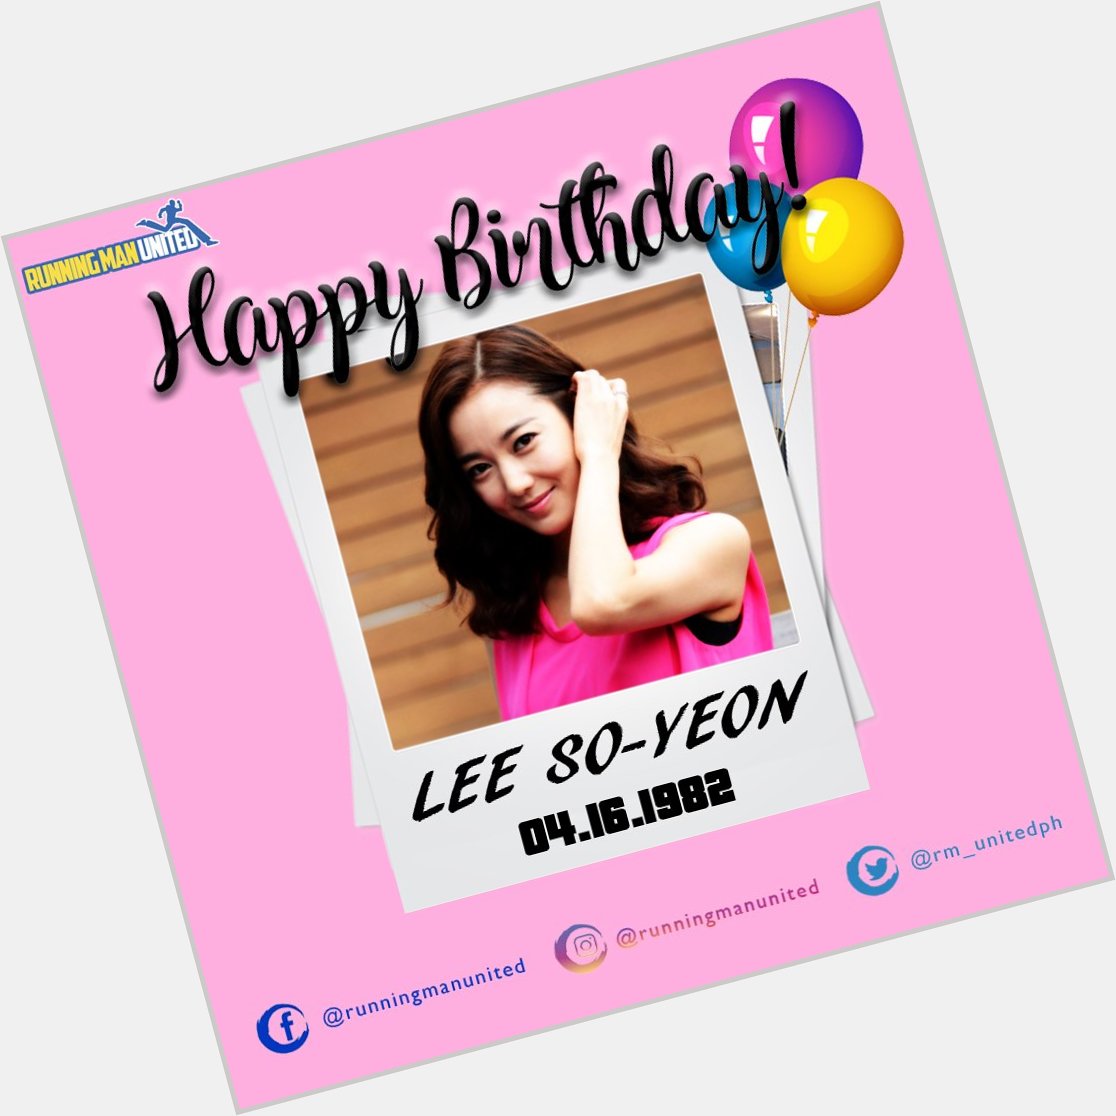 Belated
Happy Birthday Lee So-yeon! 